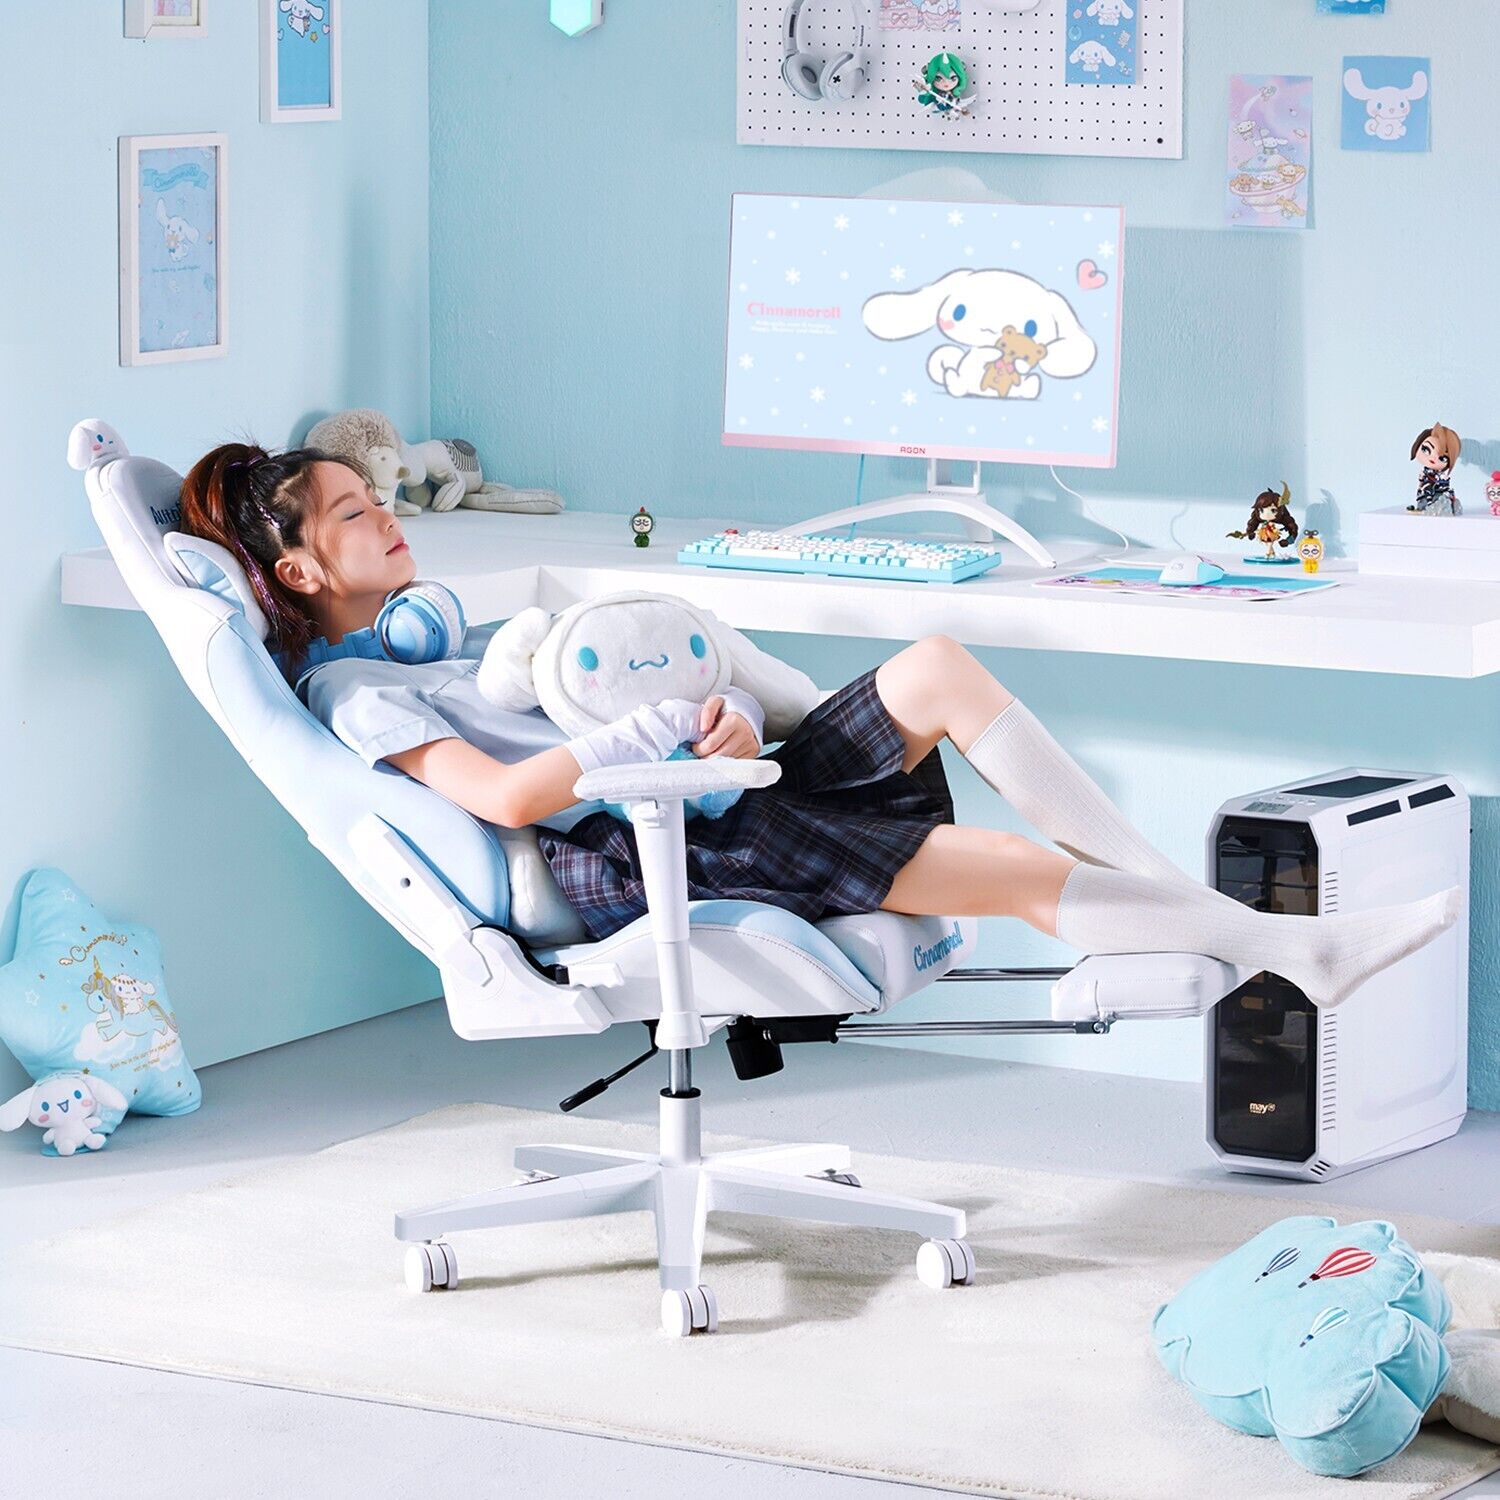 Sanrio autofull Cinnamoroll gaming chair plush toy NEW e-sports work Kawaii